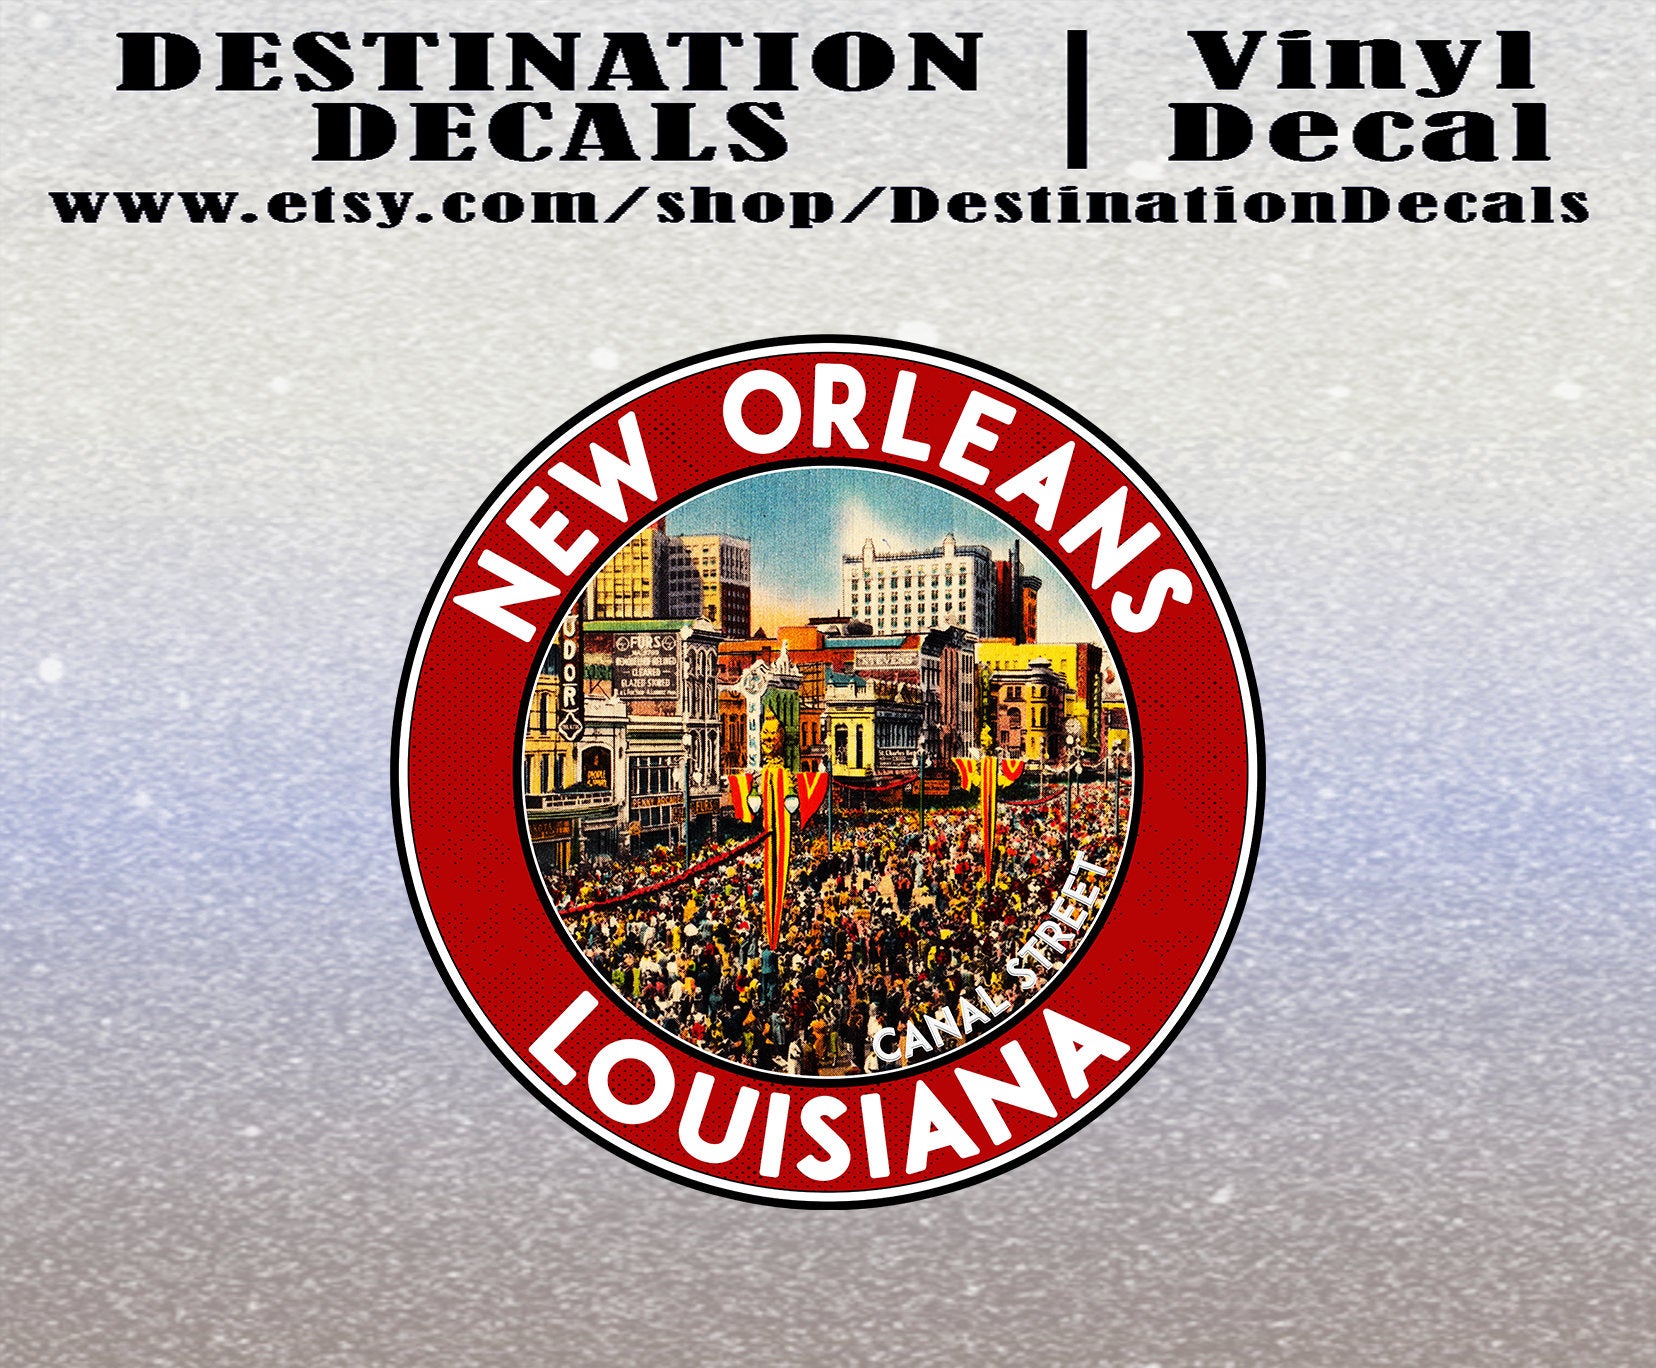 New Orleans Louisiana Decal Sticker 3.5" x 3.5" Mardi Gras Canal Street Vintage Travel